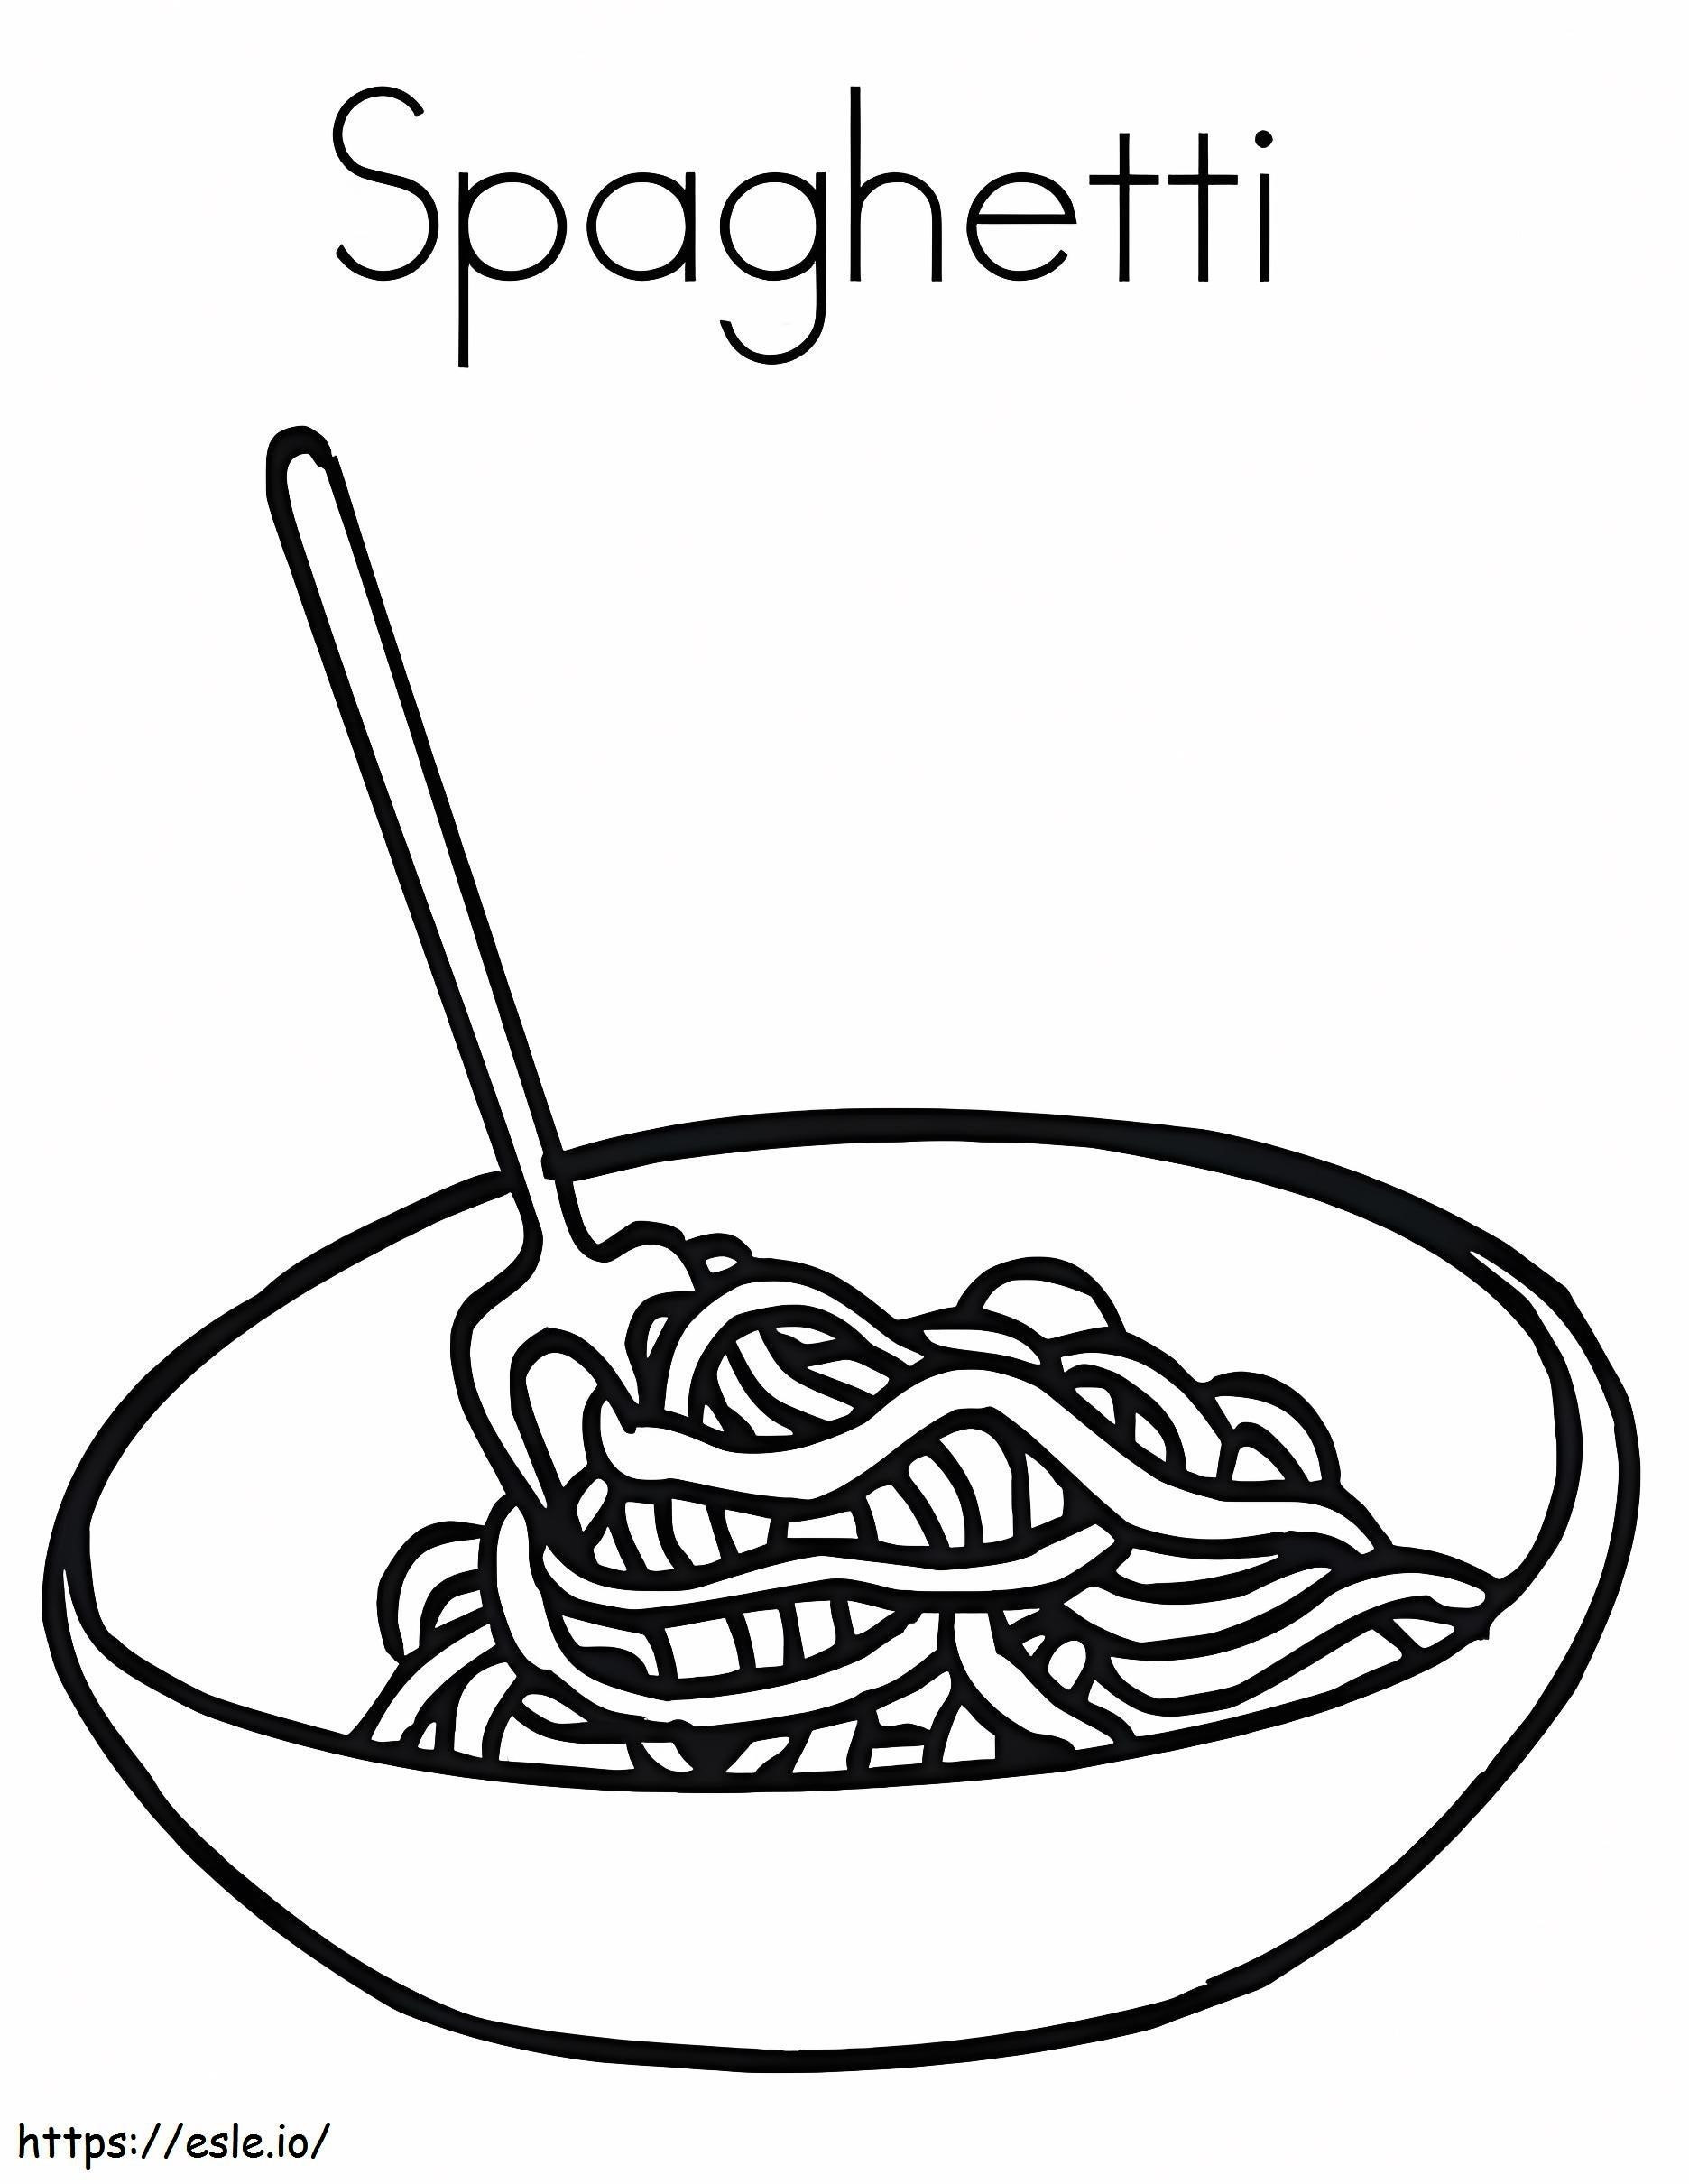 Coloriage Pâtes spaghettis à imprimer dessin